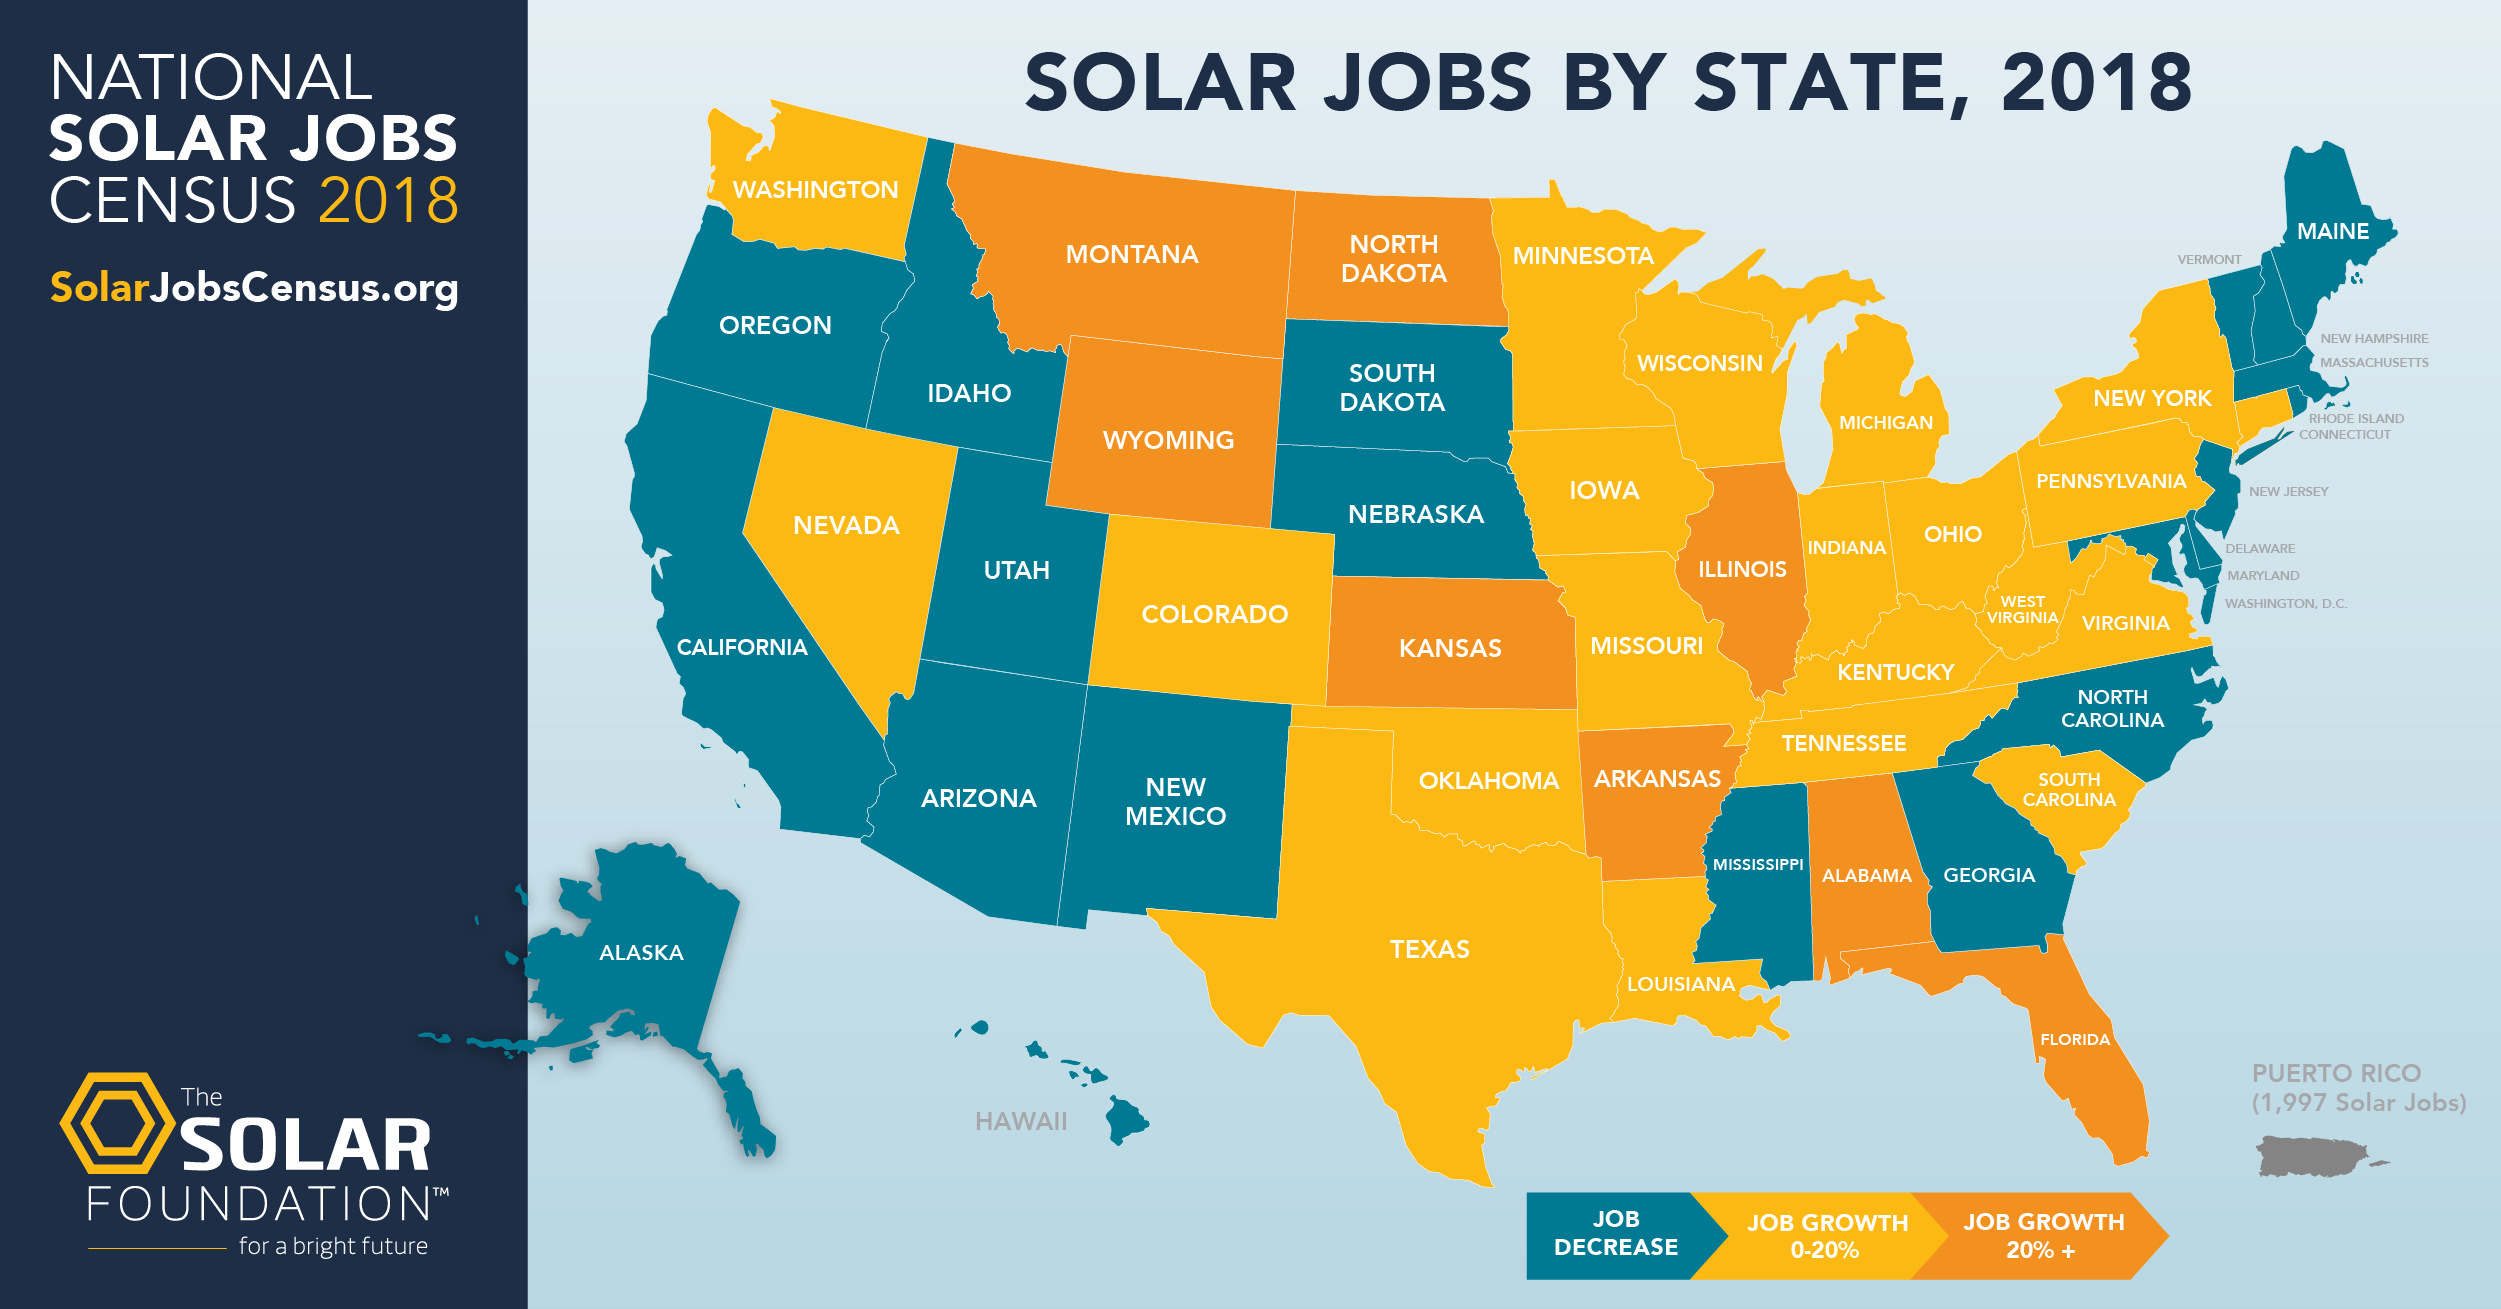 National solar jobs census 2018 chart